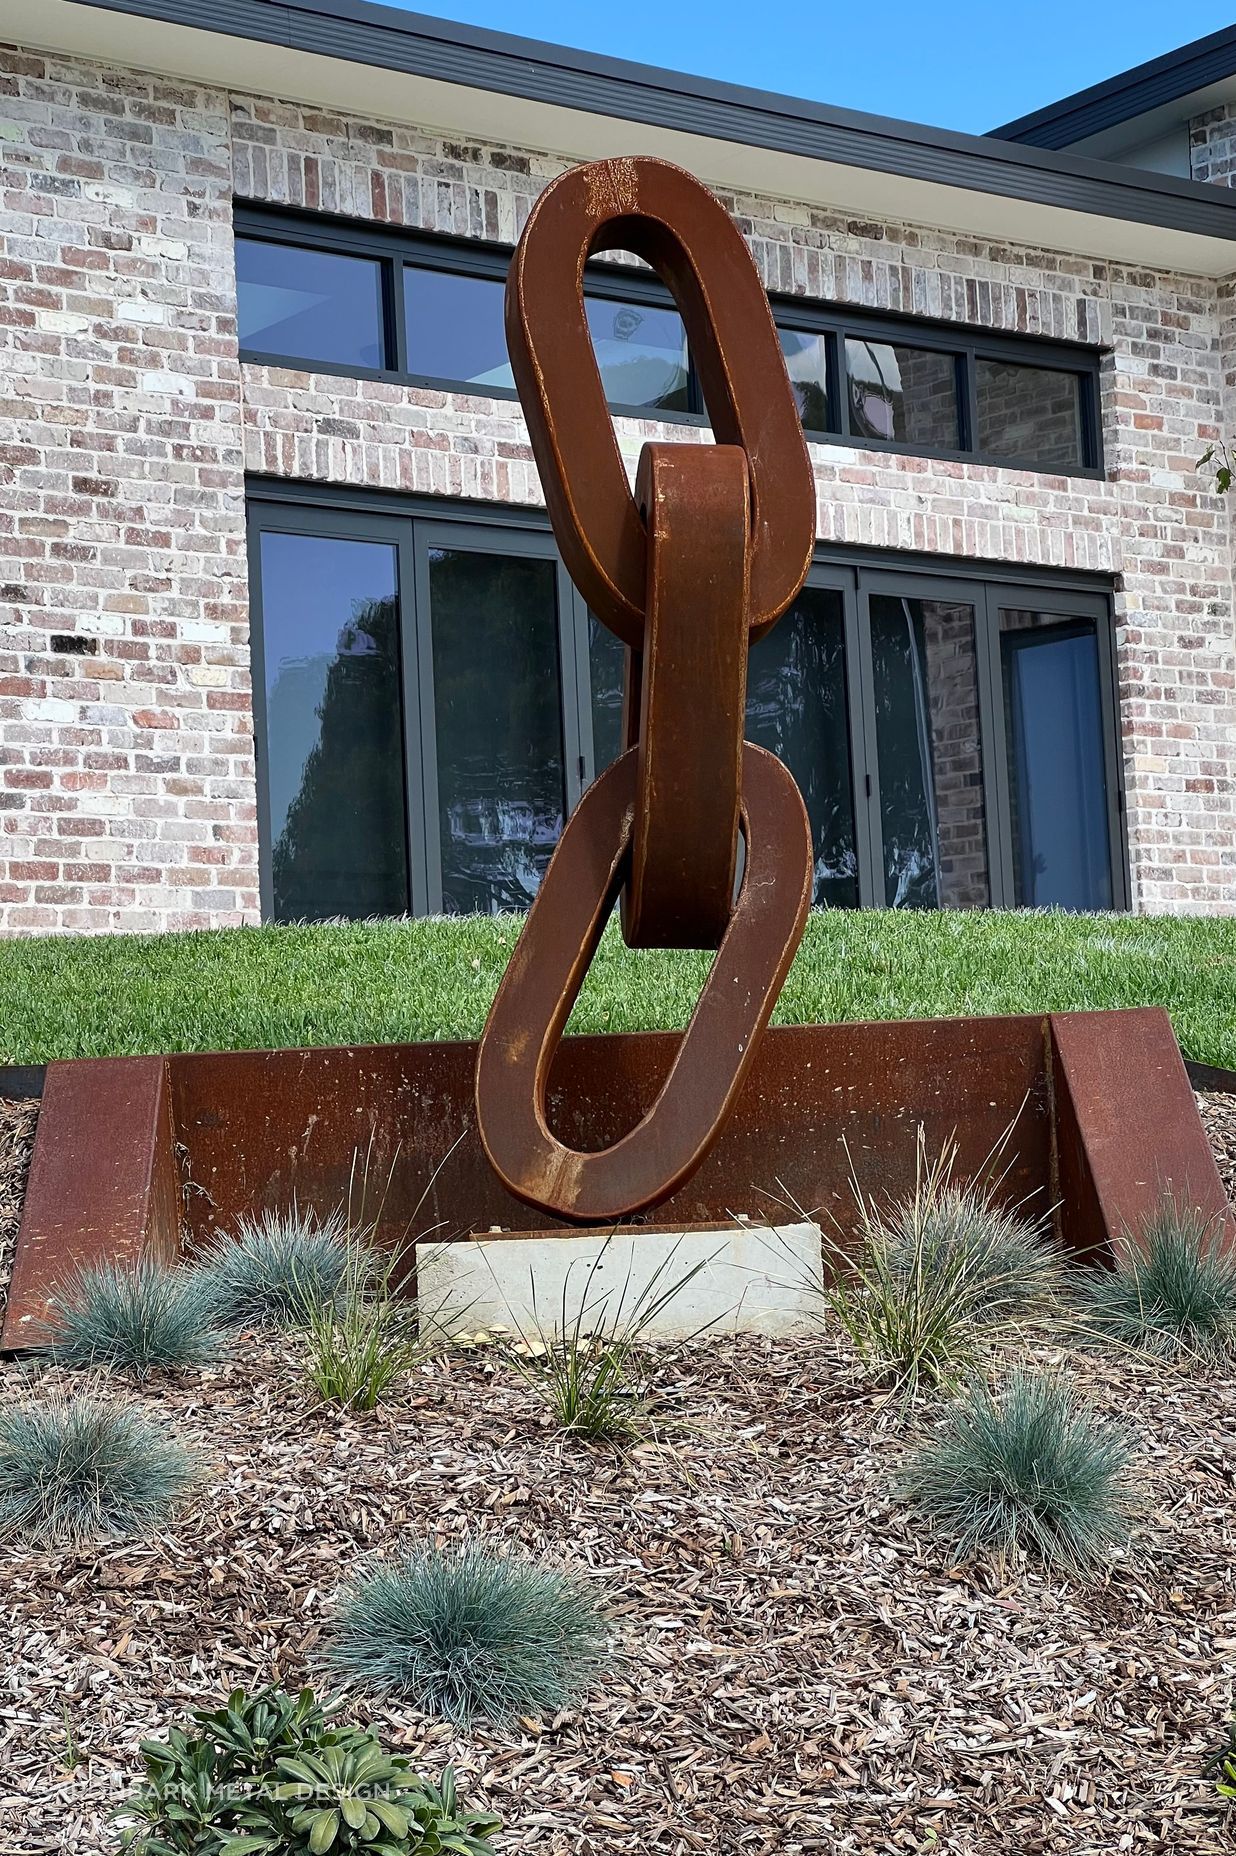 The Chain sculpture by Ironbark Metal Design